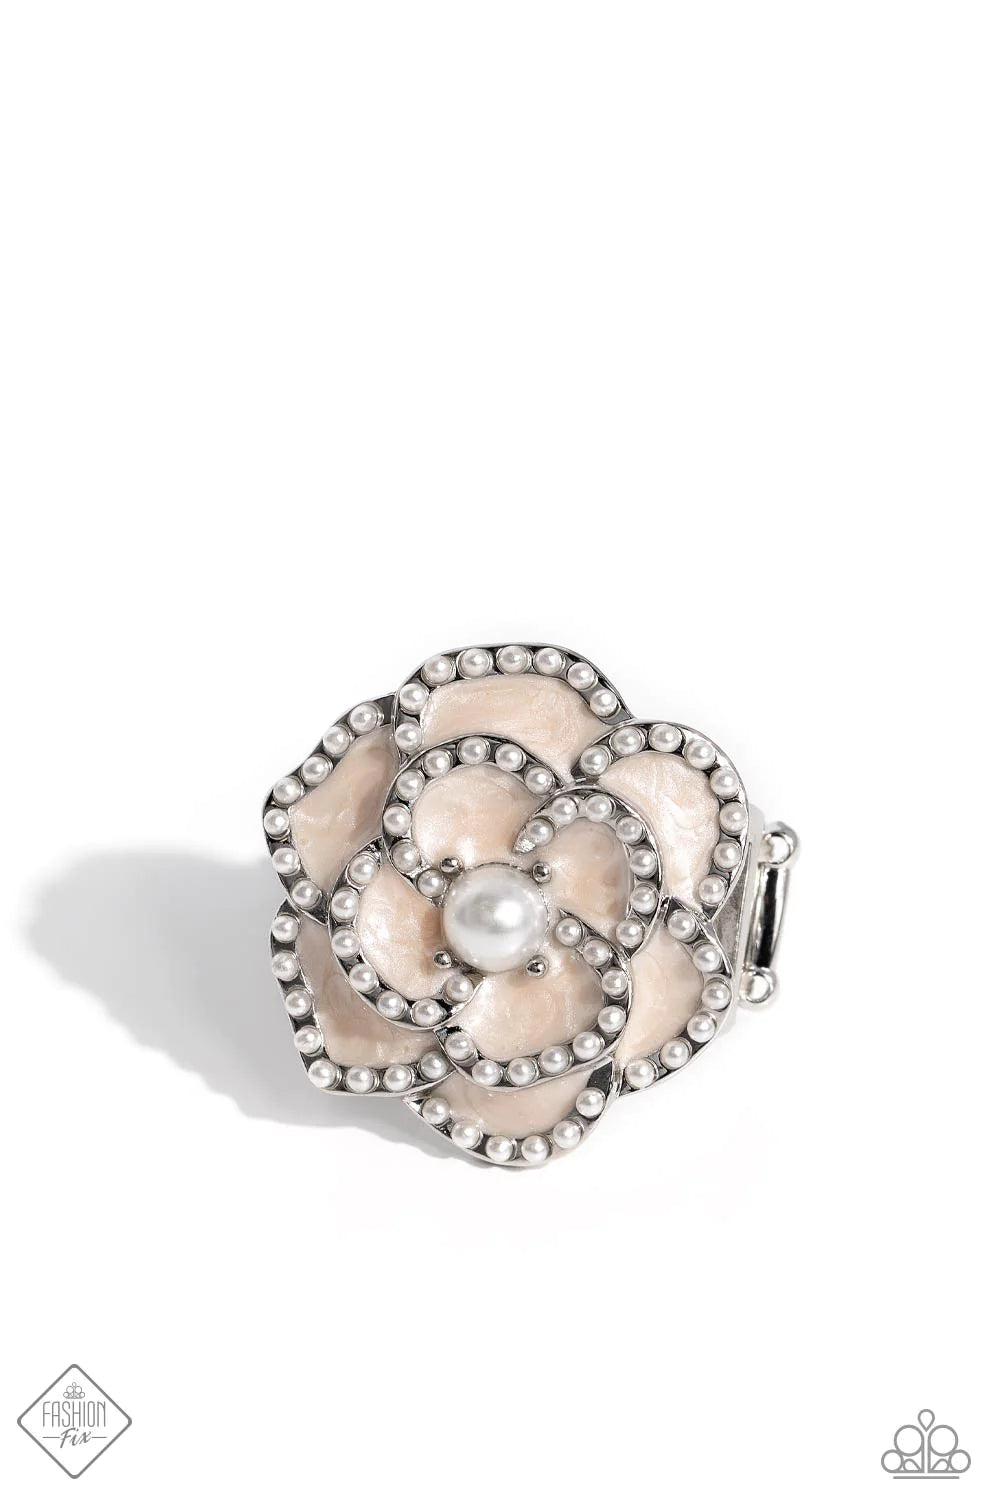 Debonair Delight - White (Pearl) Ring (FFA-0124)